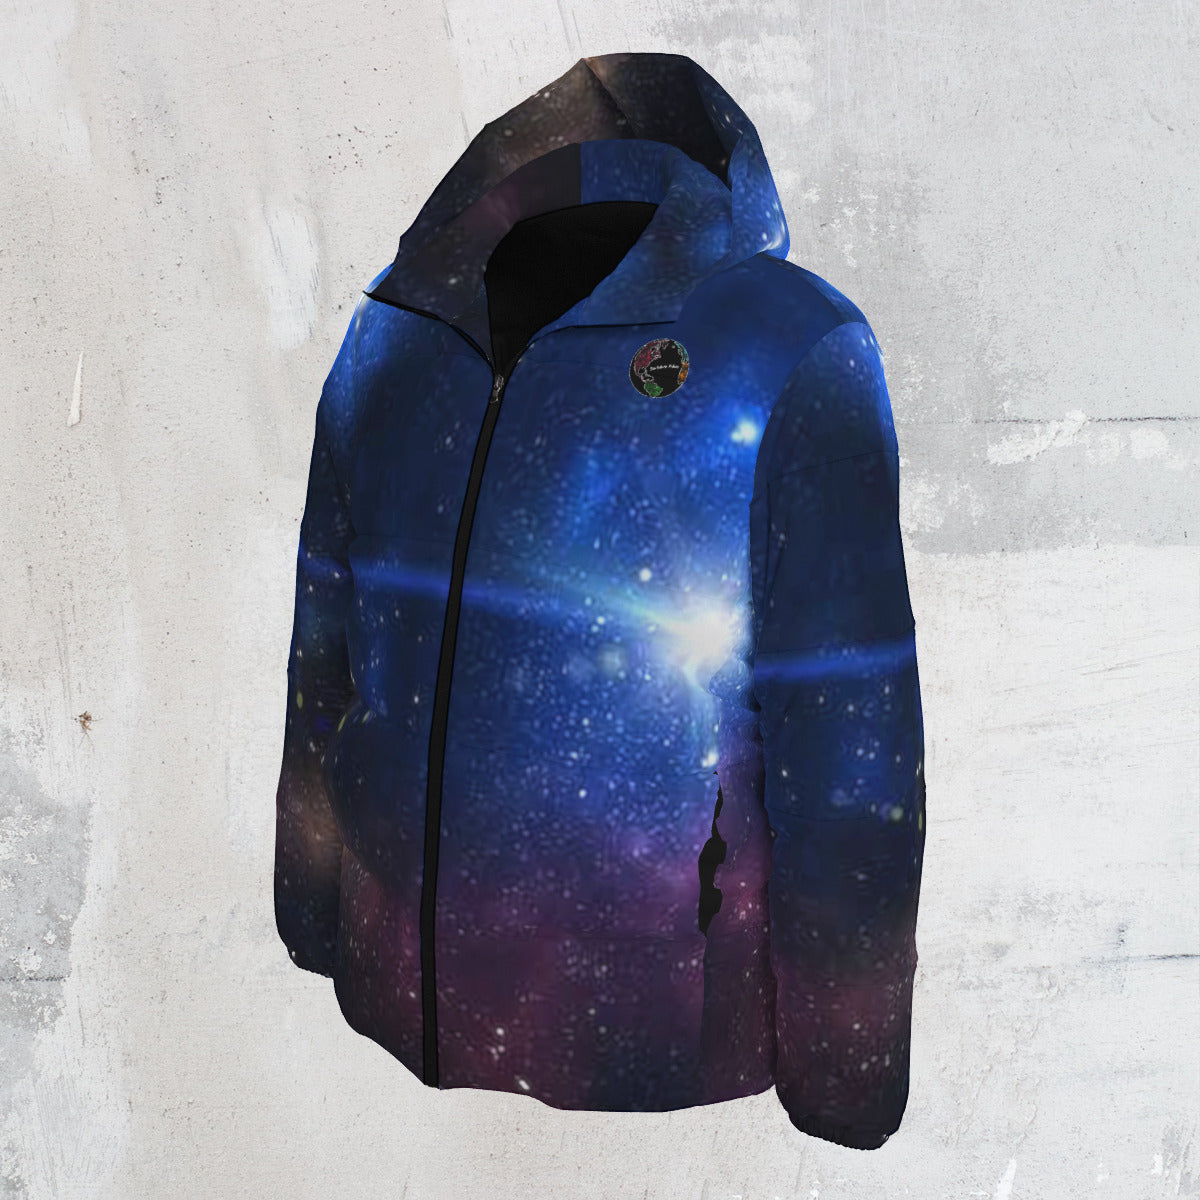 Astral Rebirth Unisex Galaxy Space Fashion Down Jacket The Nebula Palace: Spiritually Cosmic Fashion